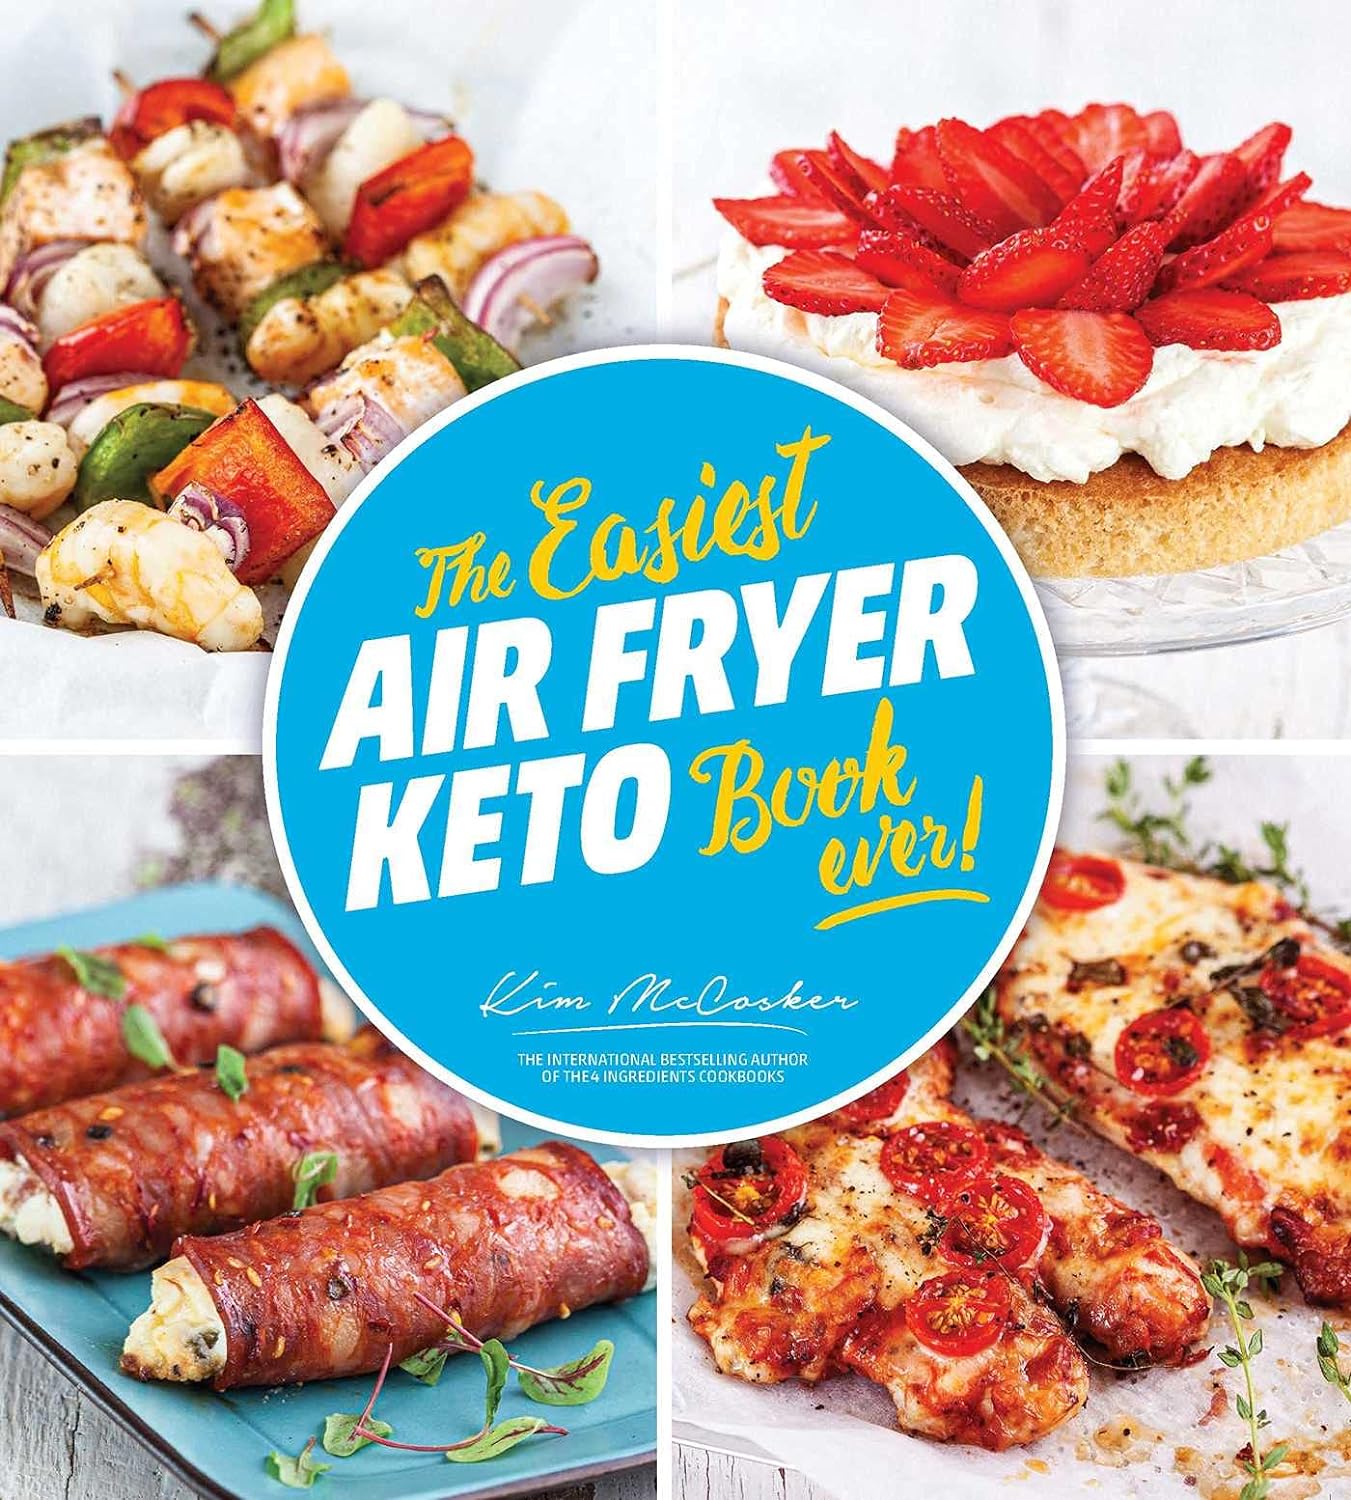 The Easiest Air Fryer Keto Book Ever - Yo Keto